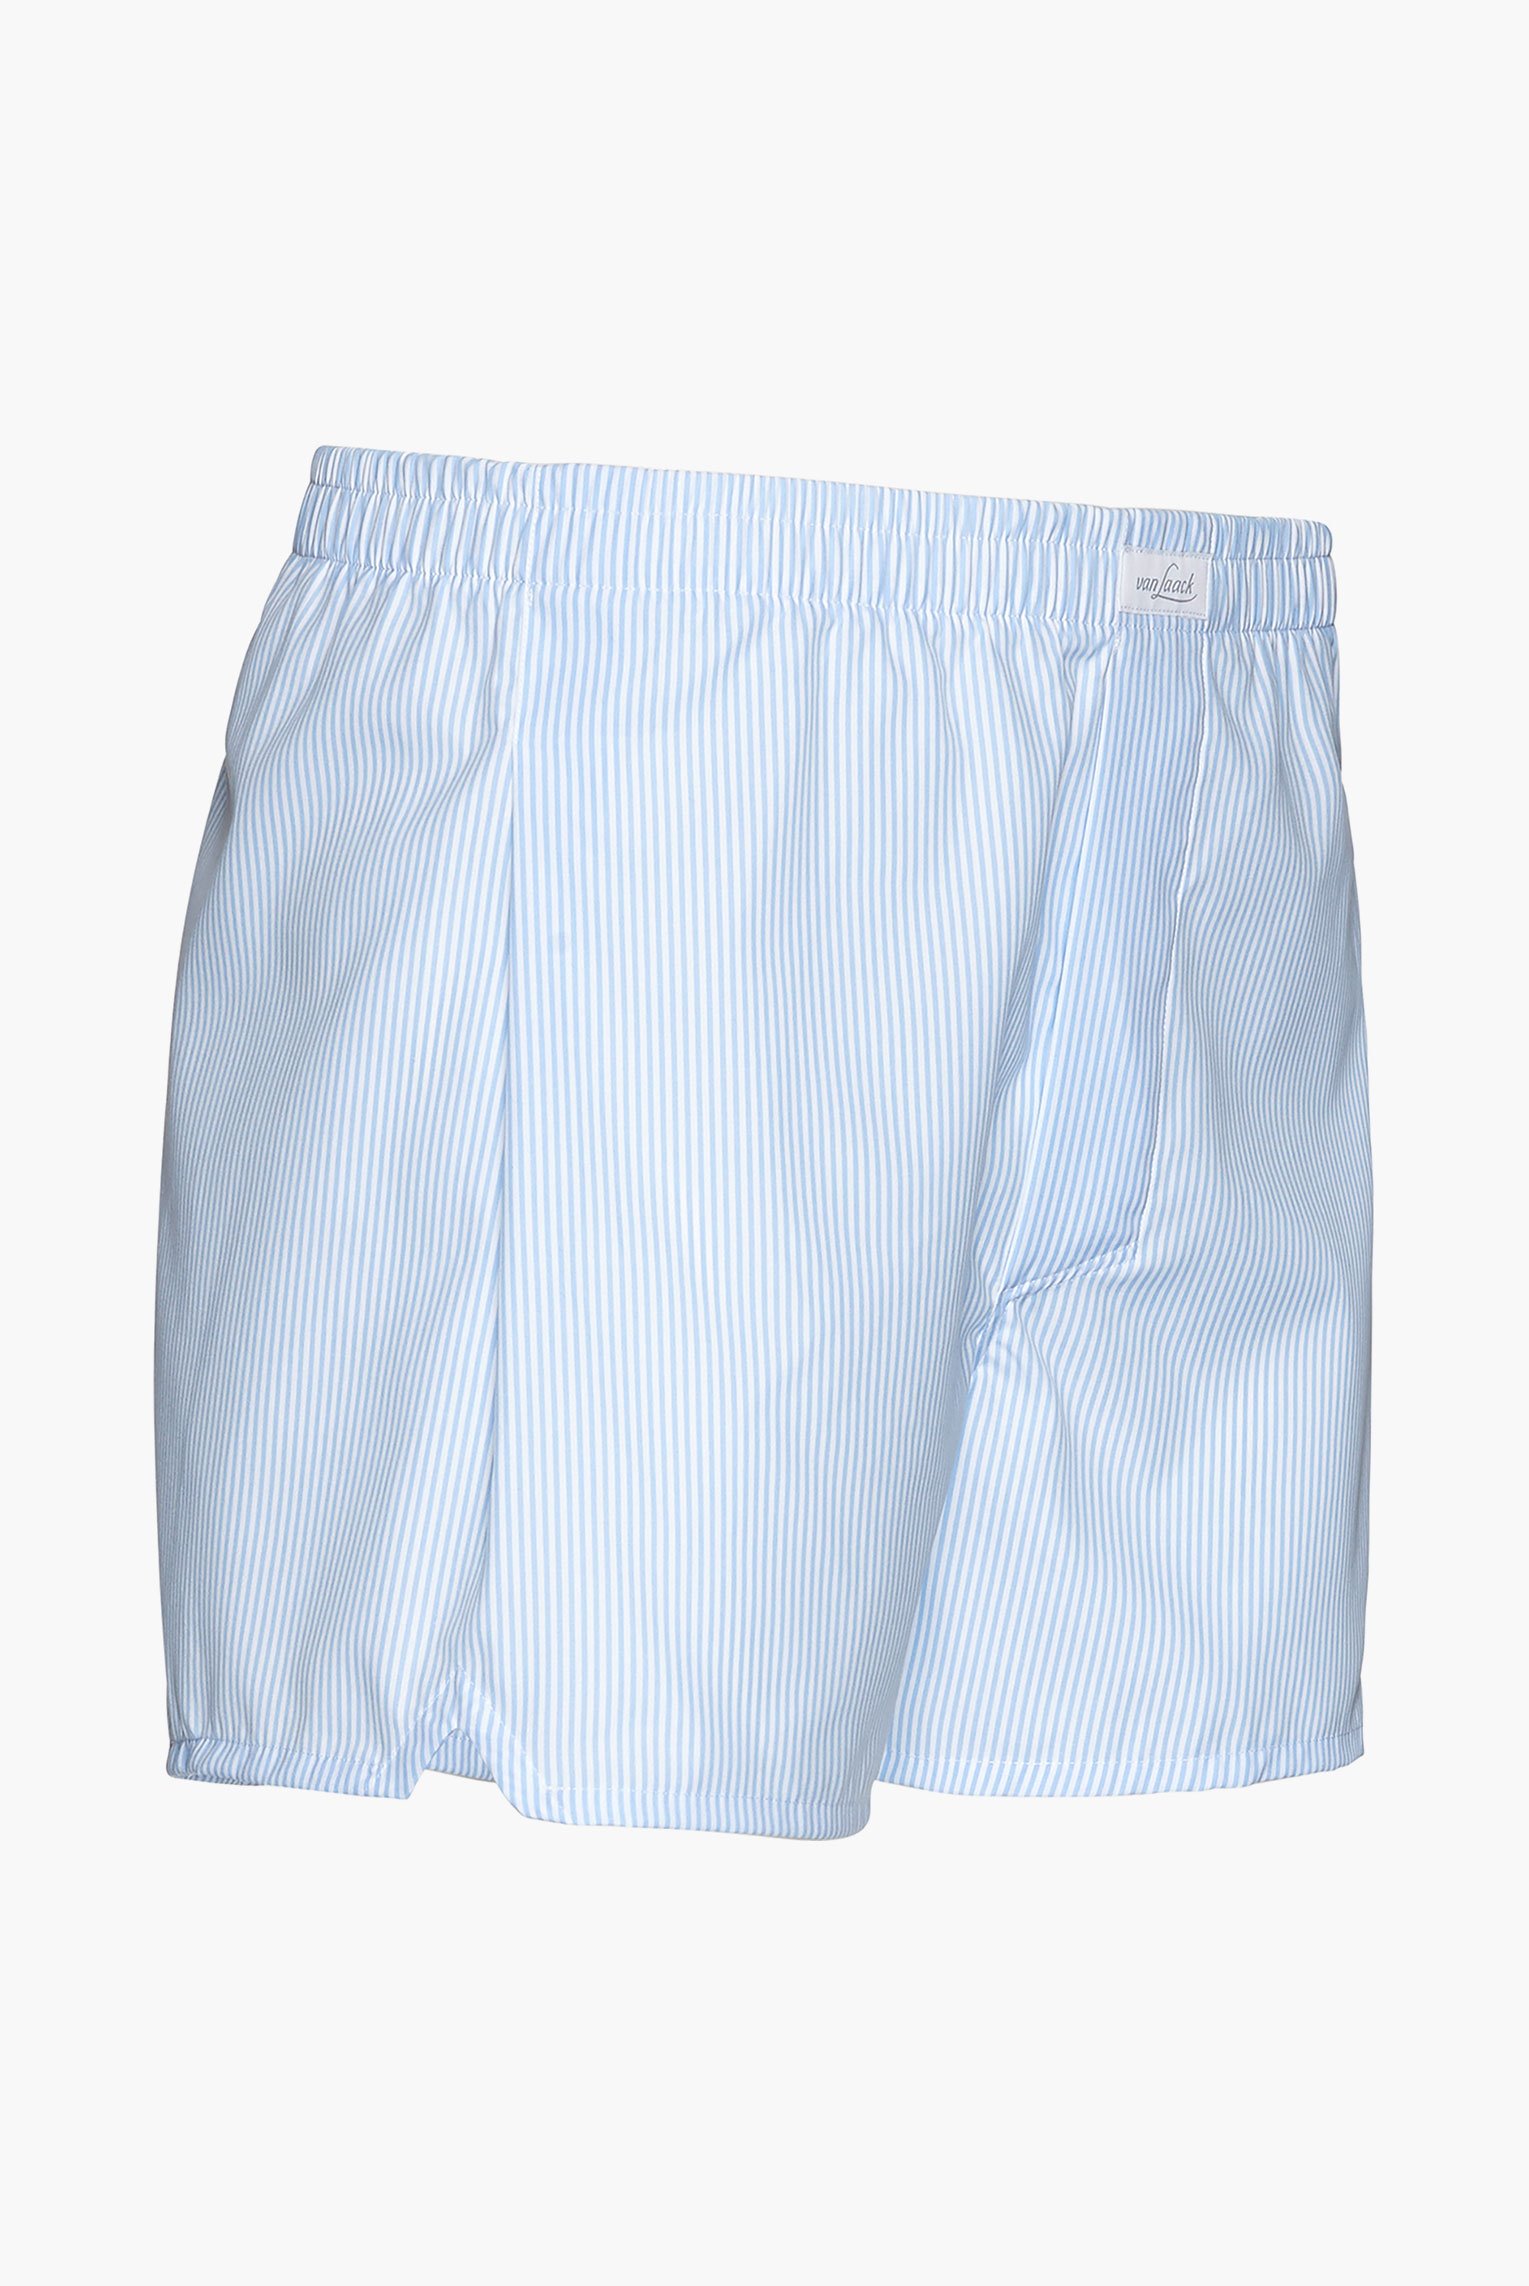 Underwear+Thin Striped Poplin Boxer Shorts+91.1100.V4.141786.720.46